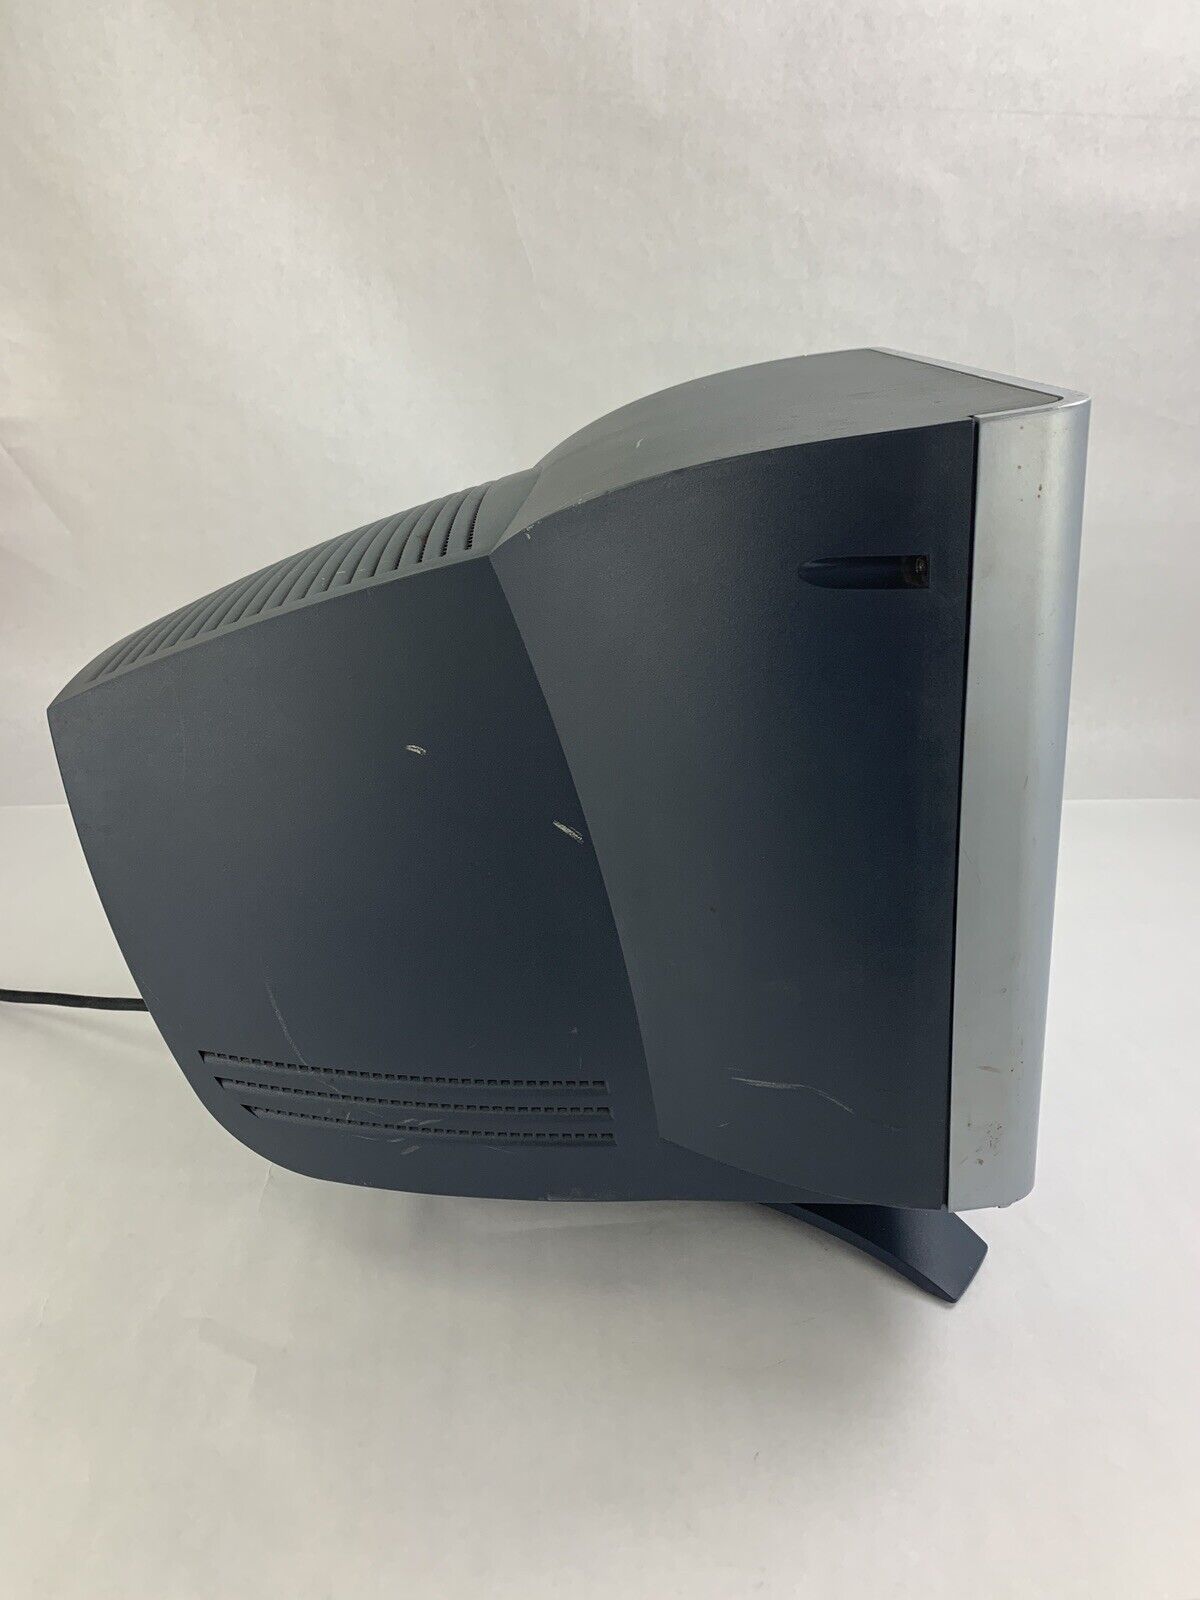 HP Pavilion 16” Anti-Glare MX704 CRT VGA Computer Monitor Retro Gaming Tested